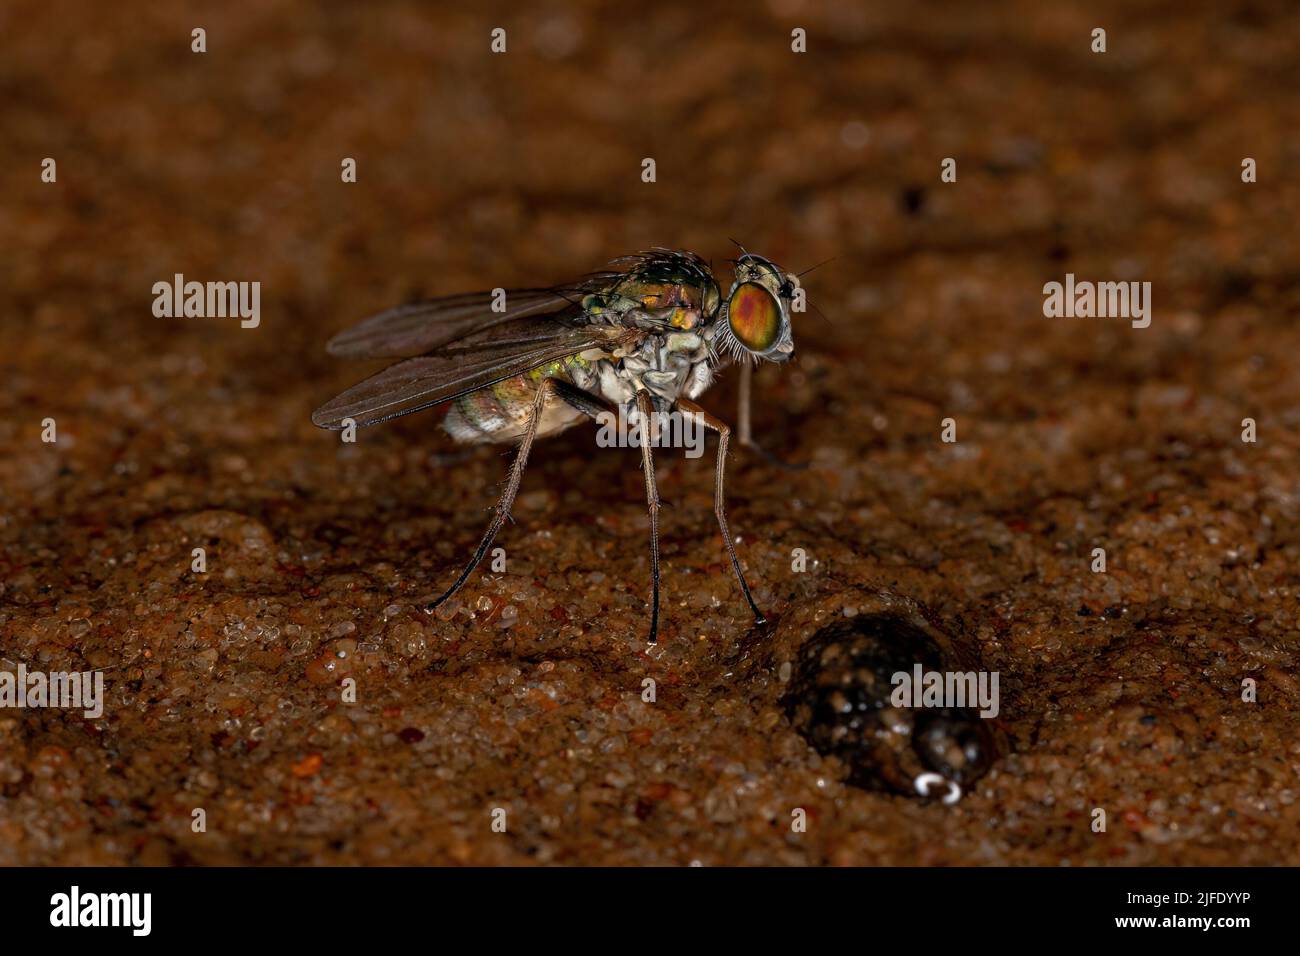 Adult Long-legged Fly of the Family Dolichopodidae Stock Photo